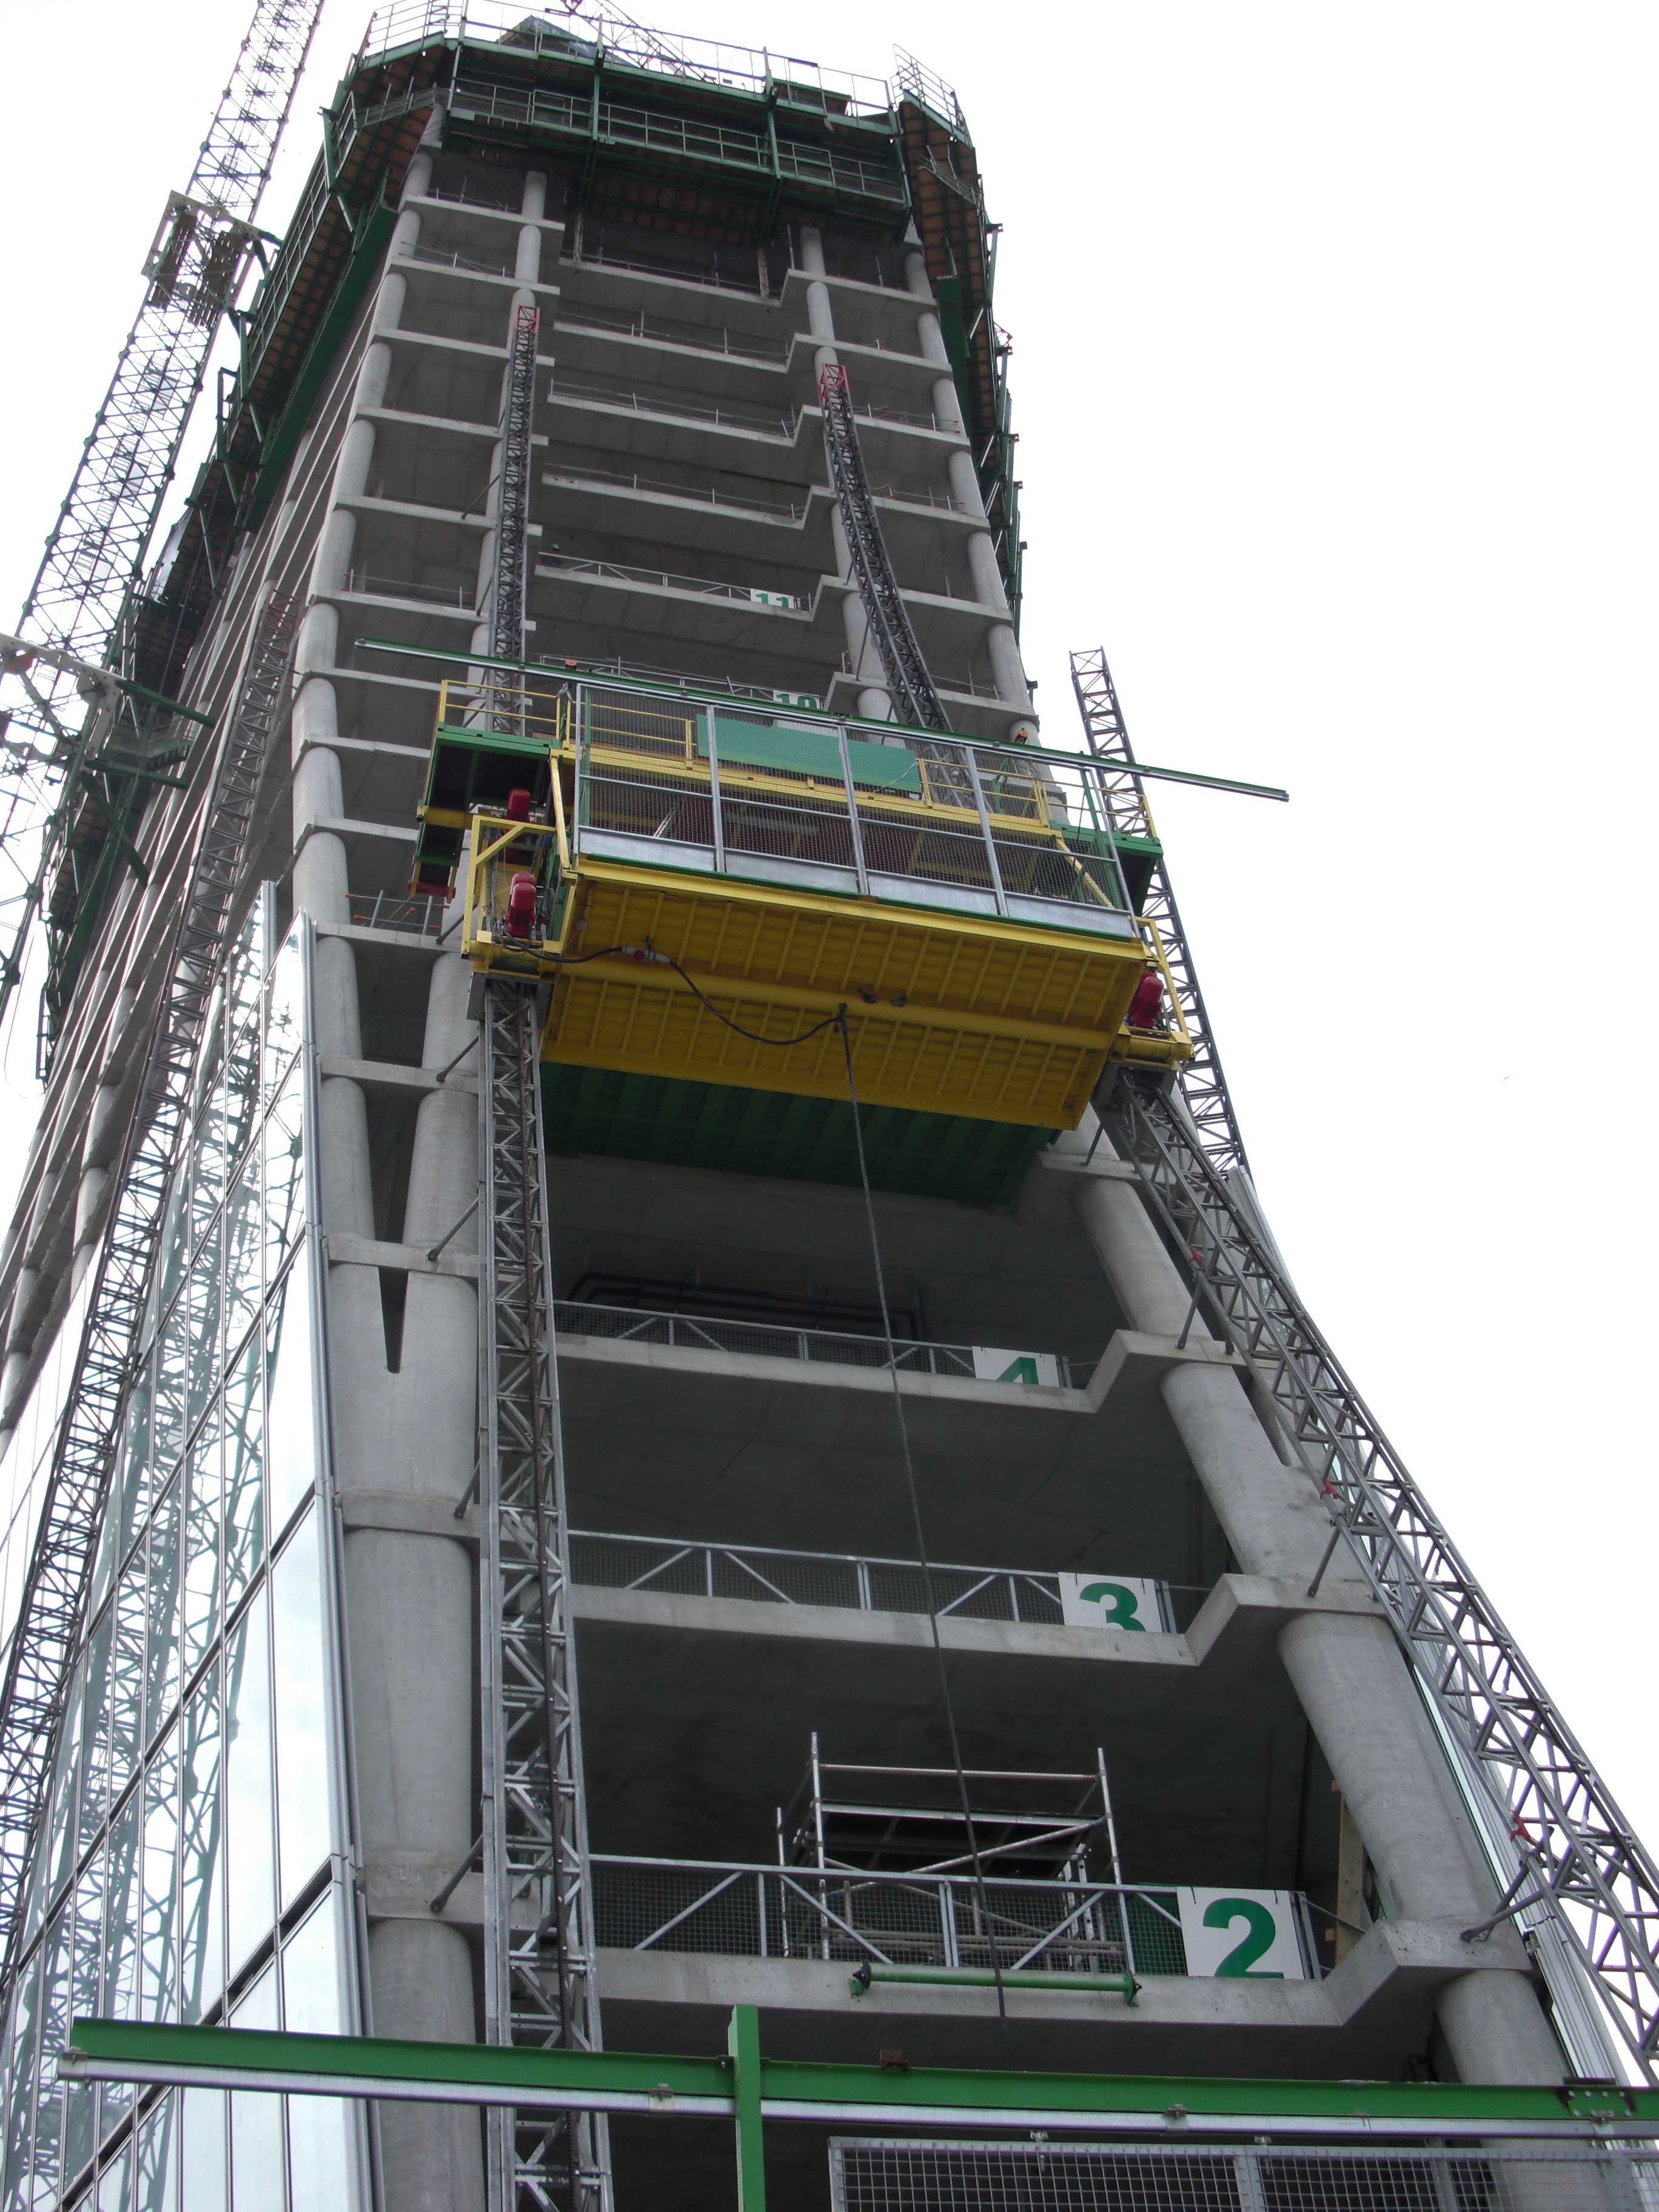 CMA-CGM Tower - 147 m